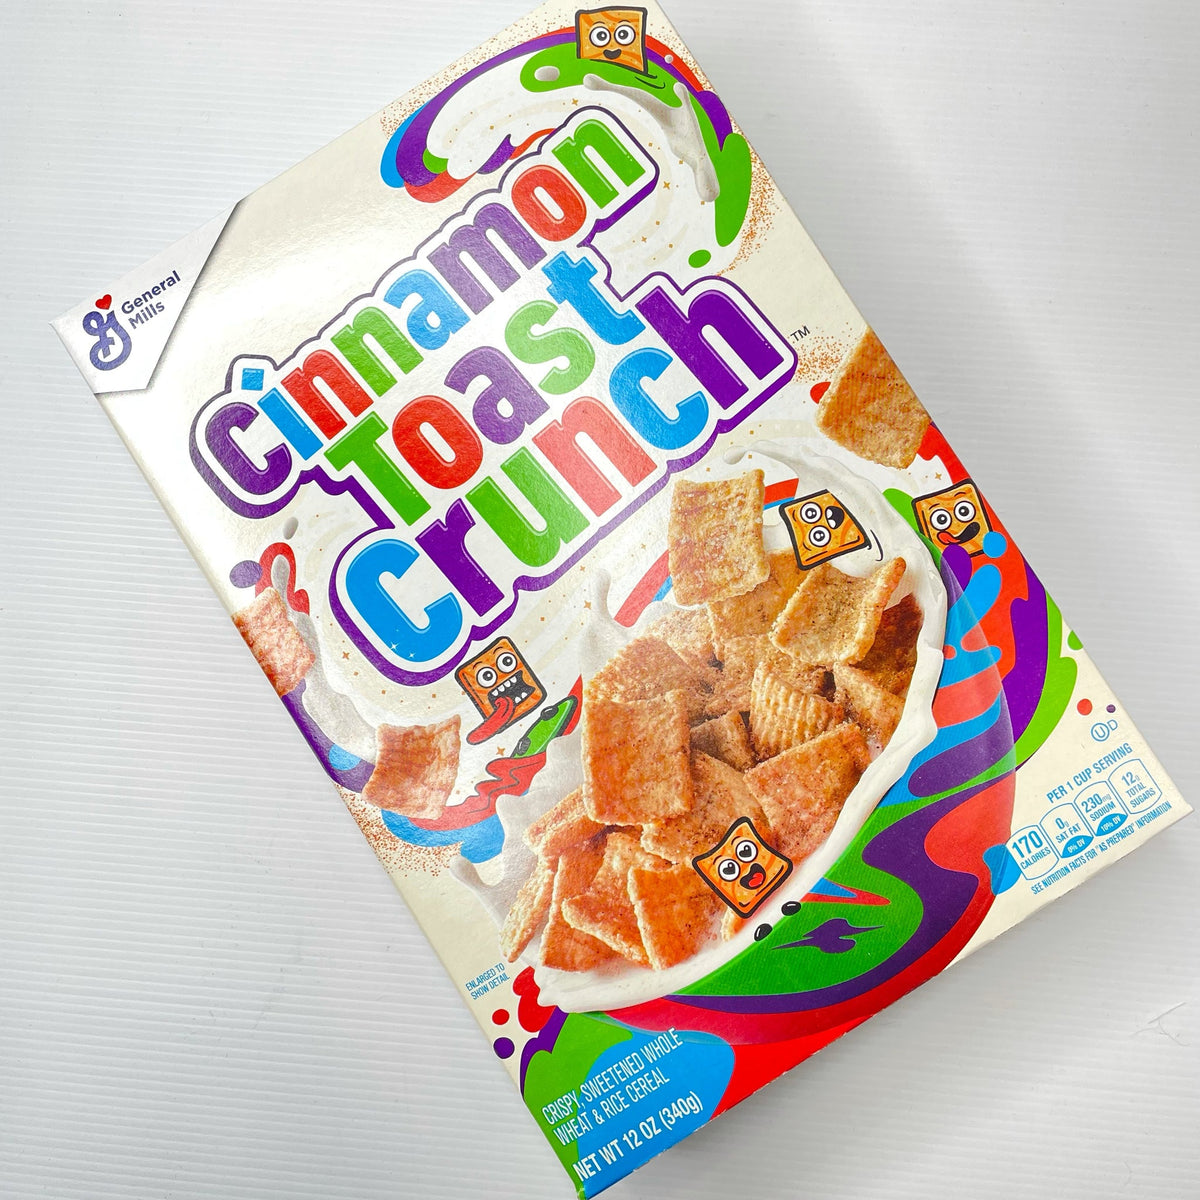 General Mills Cinnamon Toast Crunch Cereal (340 g) General Mills